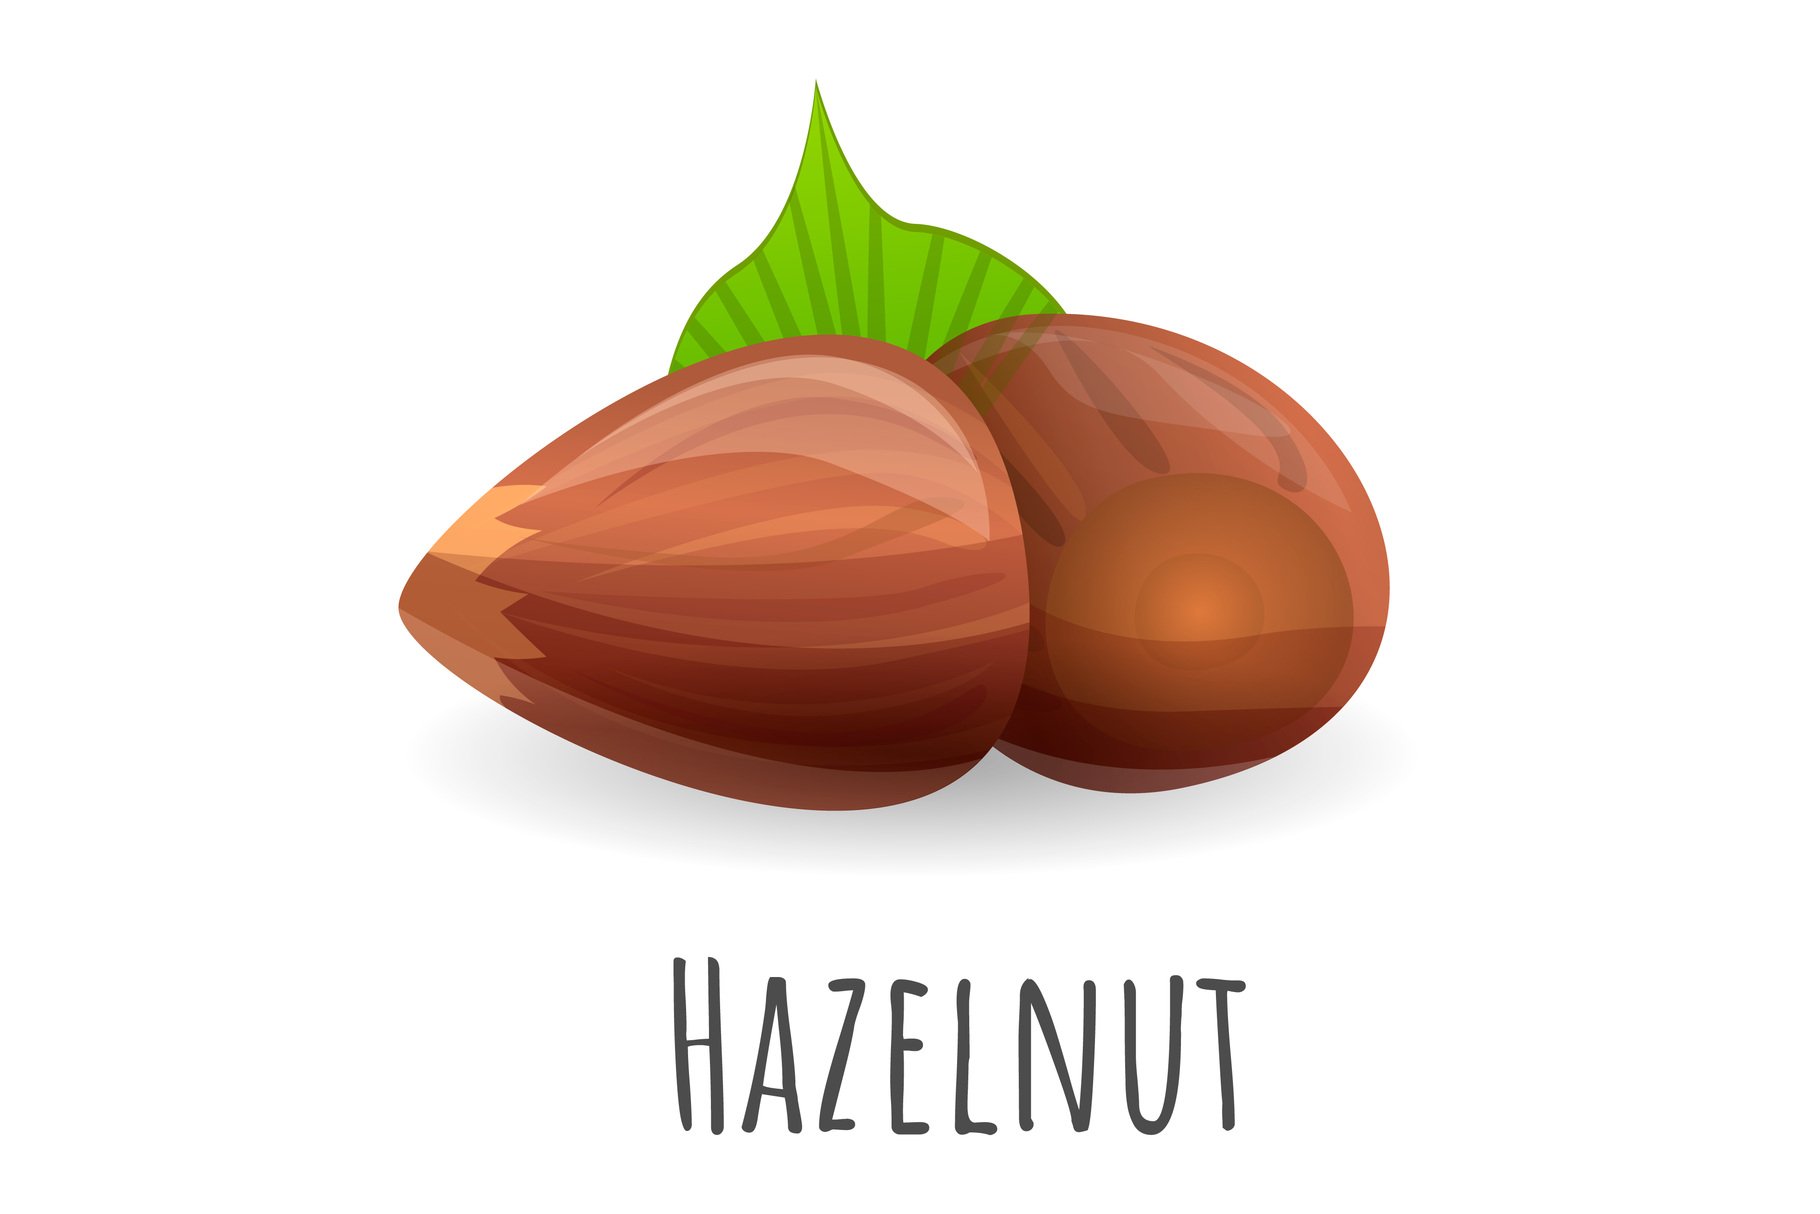 Black lettering "Hazelnut" and an illustration of 2 hazelnuts on a white background.